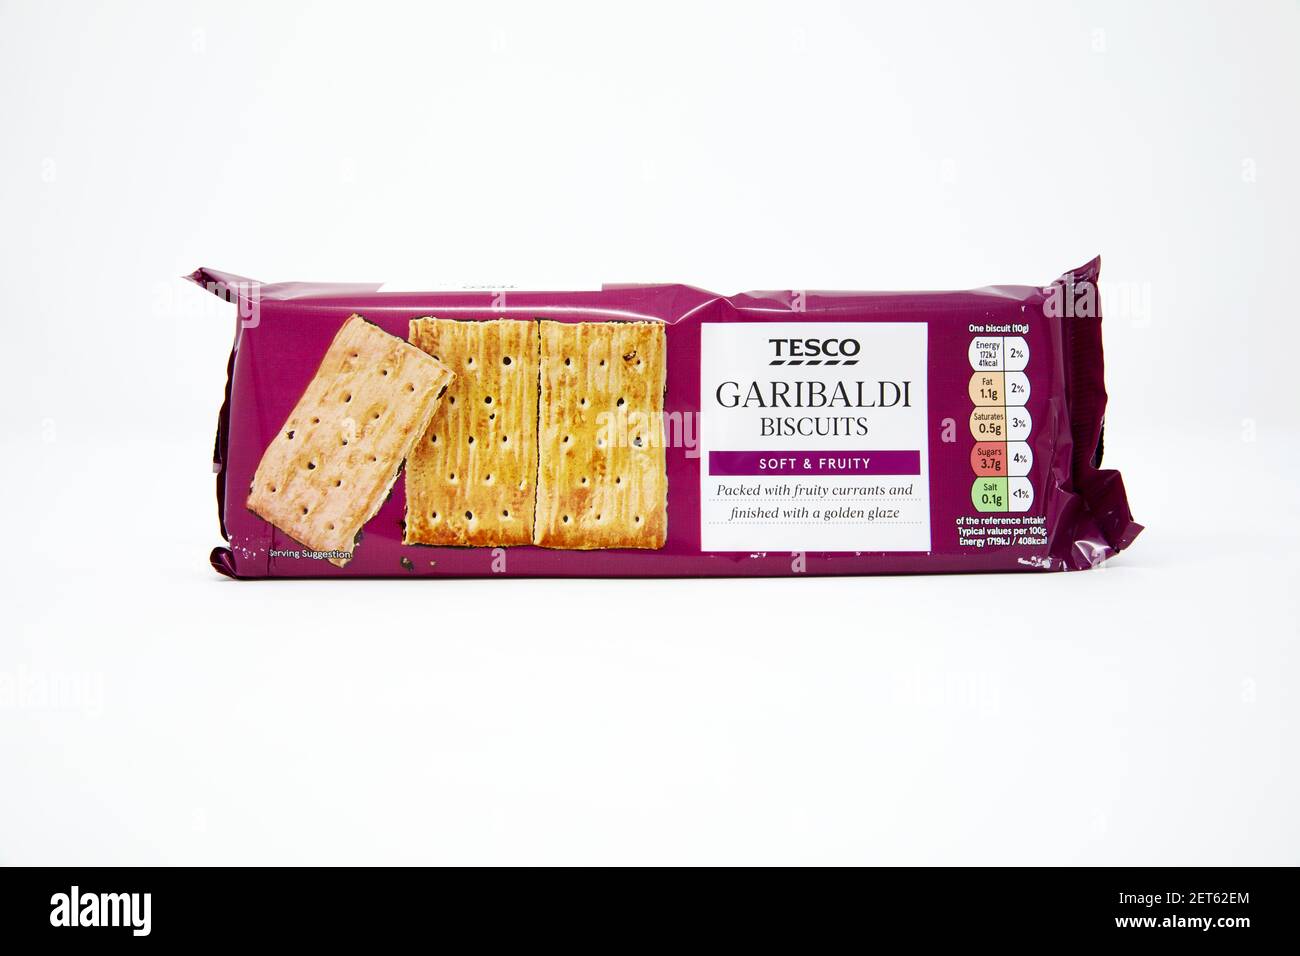 Tesco Garibaldi Biscuits Stock Photo - Alamy